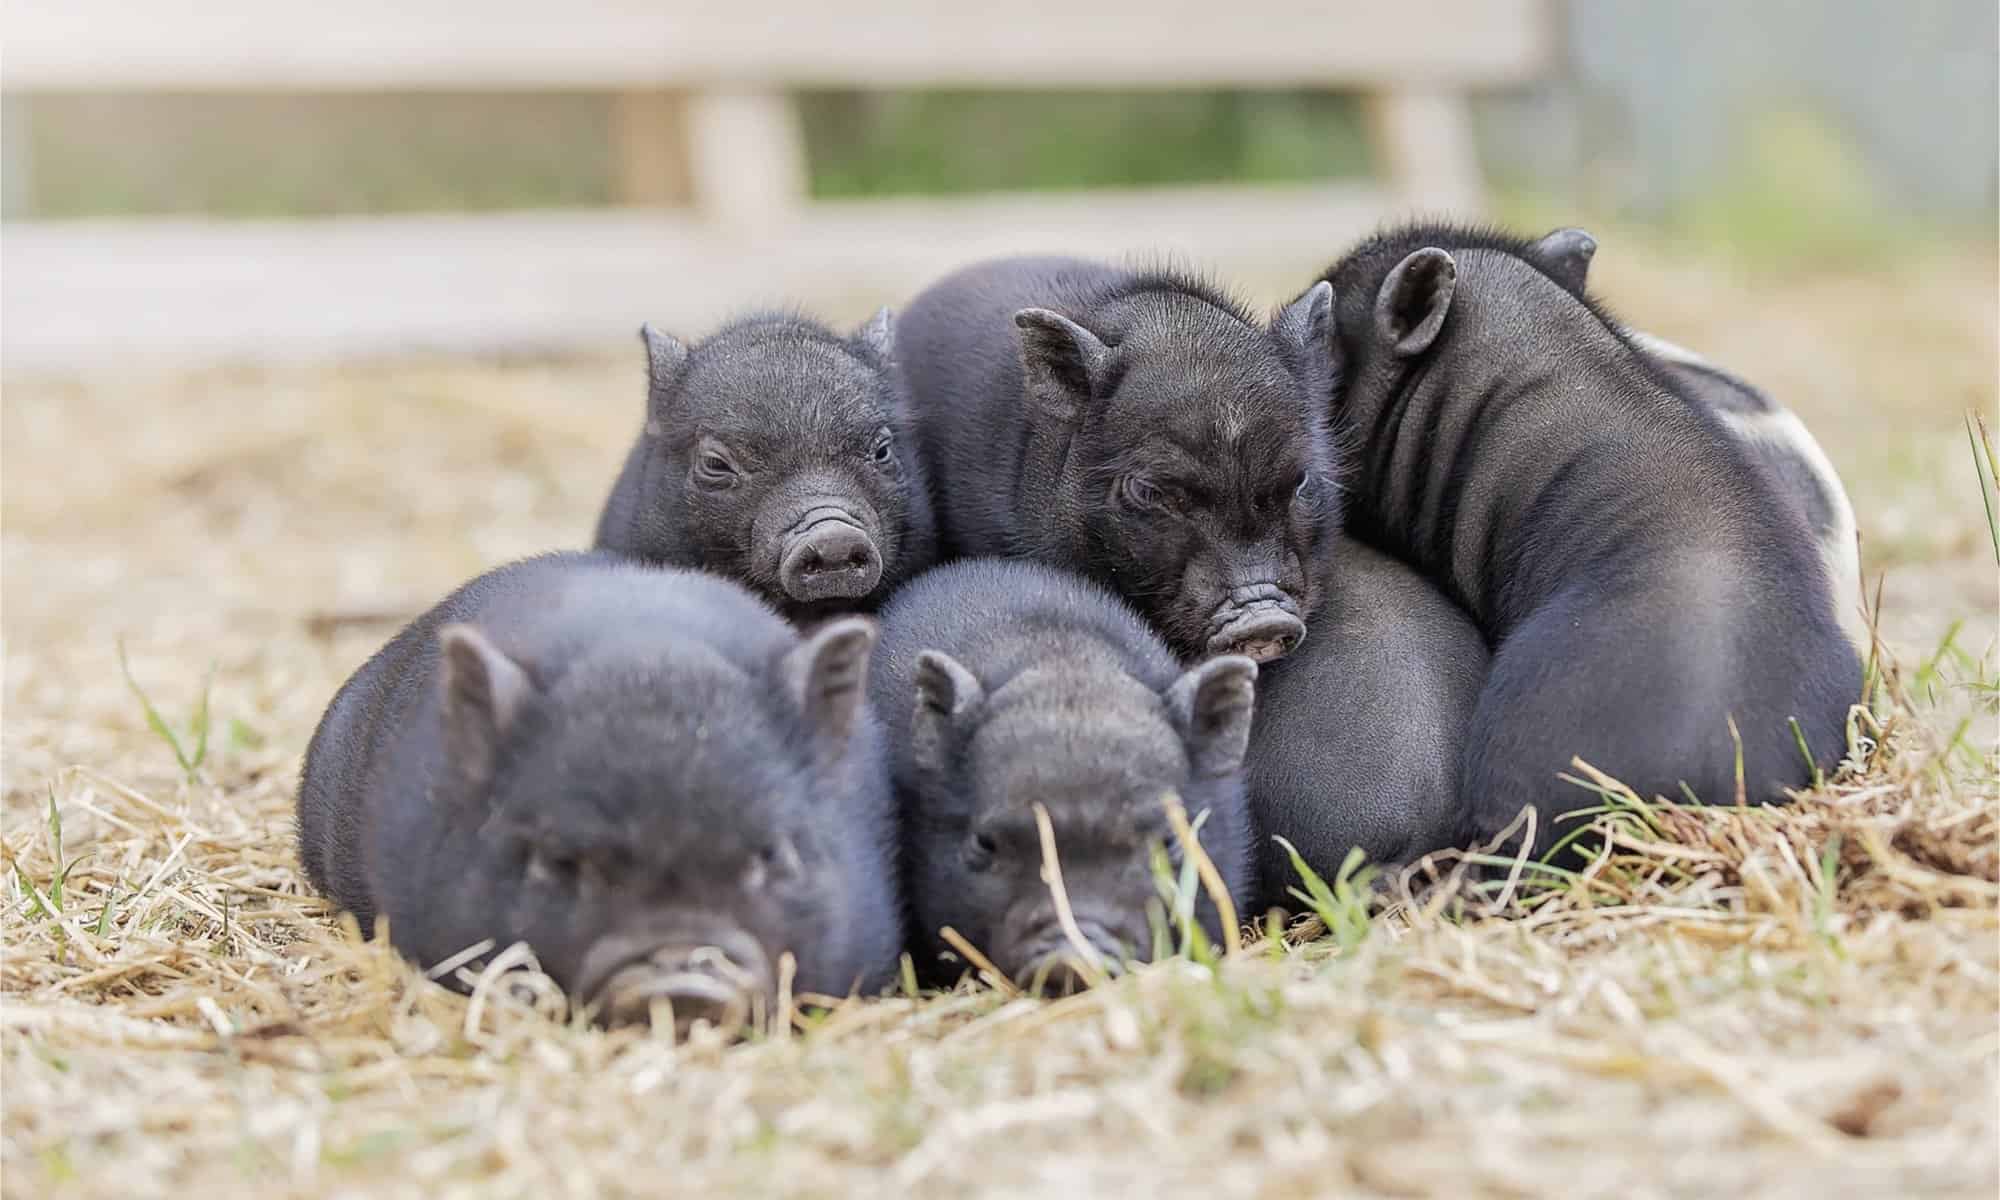 Teacup pig babies